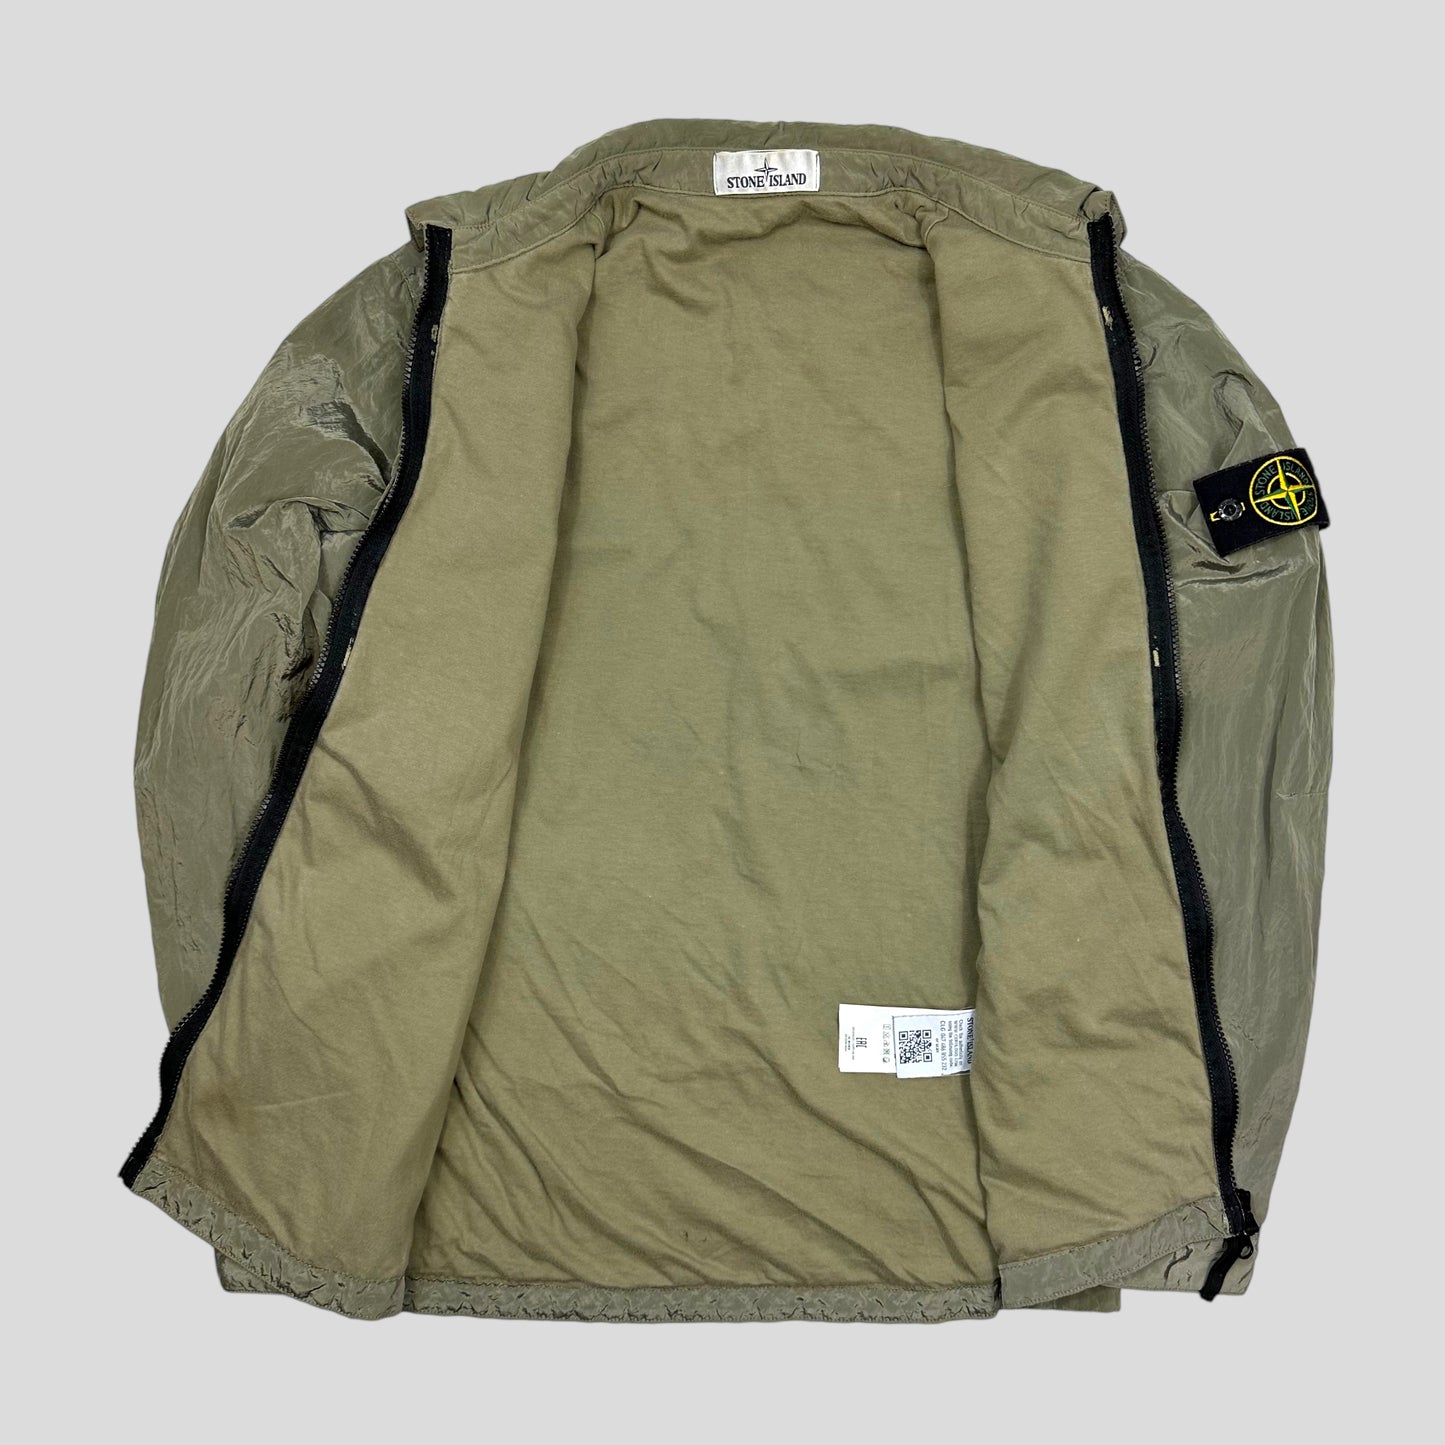 Stone Island Khaki Nylon Metal Overshirt Jacket - M